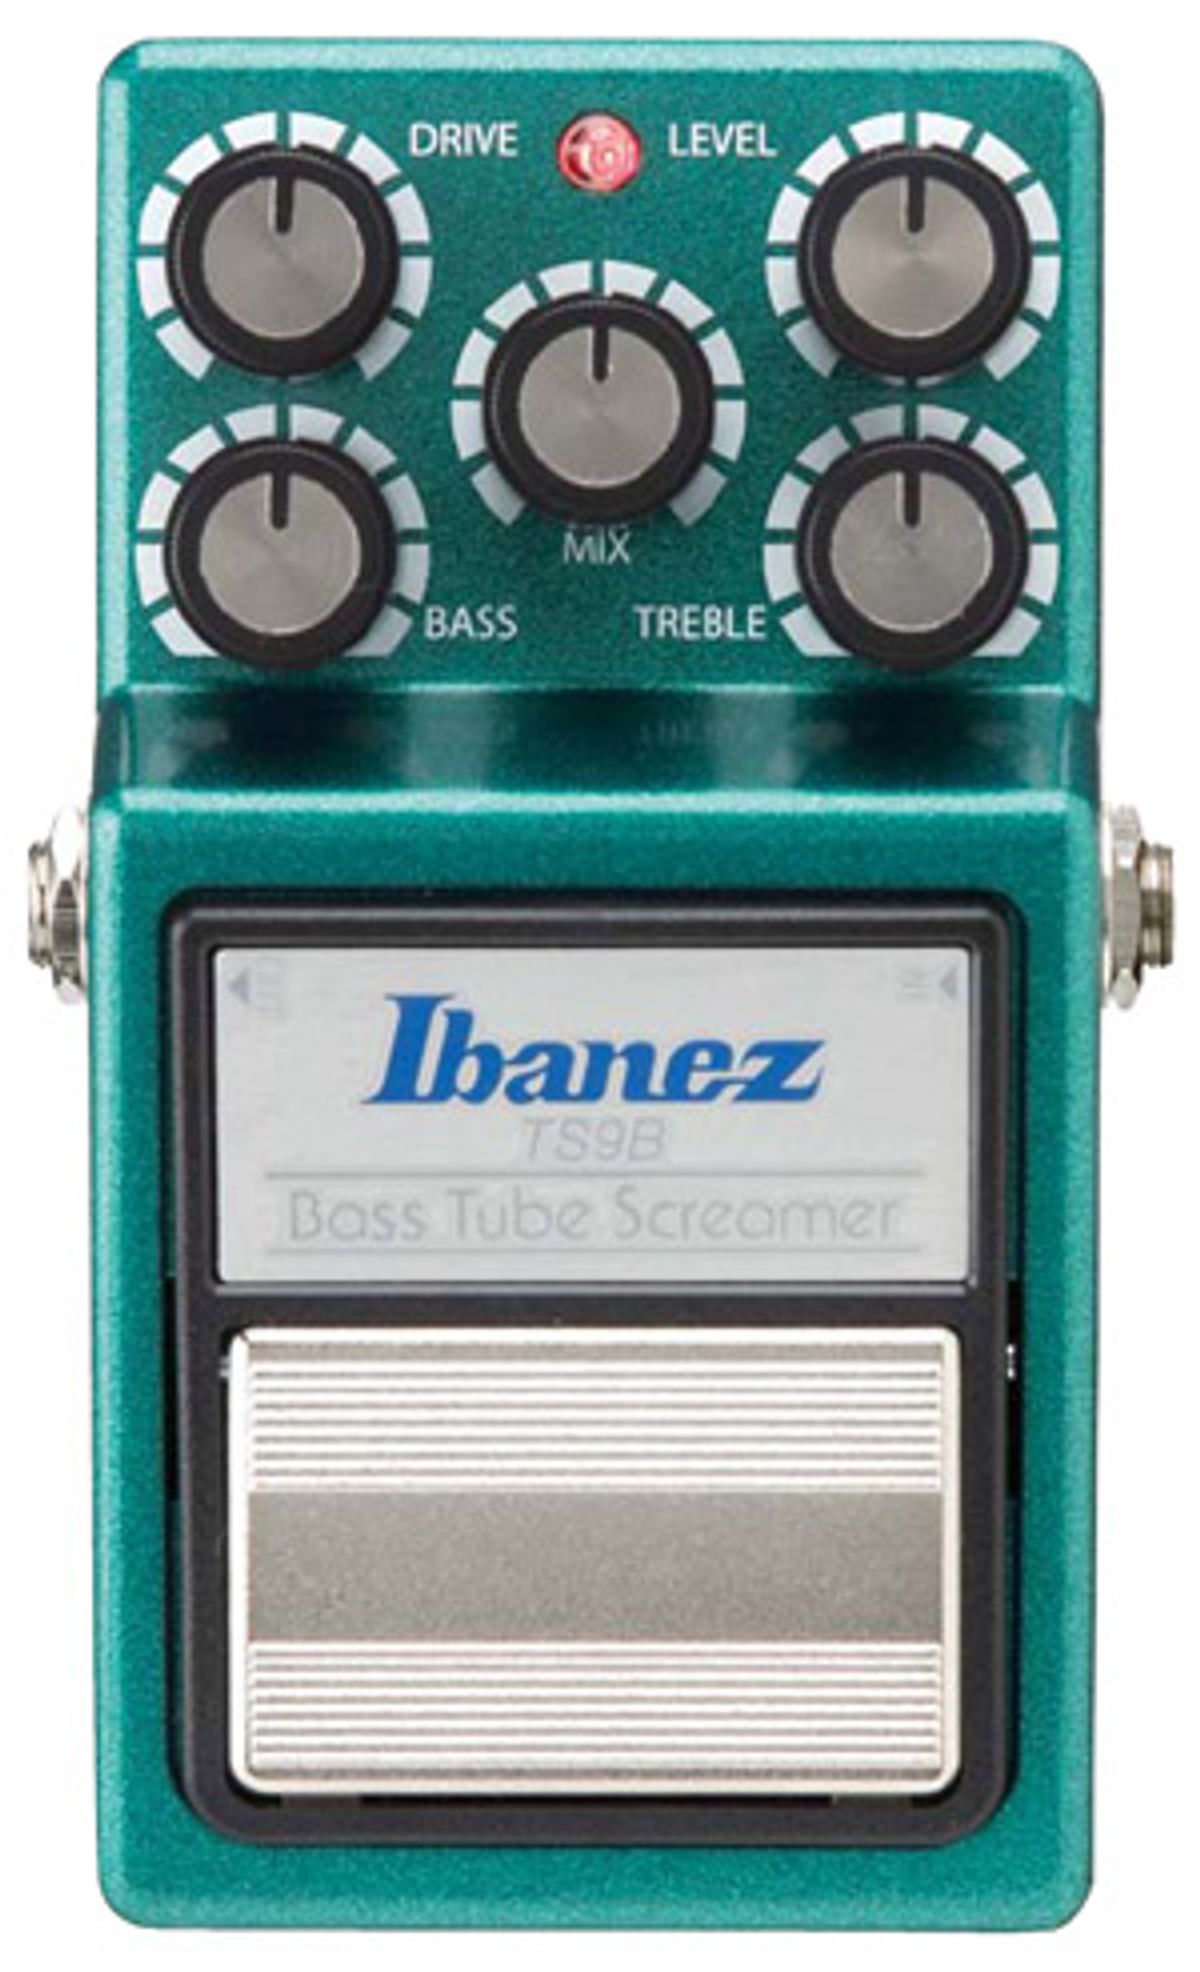 Ibanez TS9B Bass Tube Screamer Pedal Review